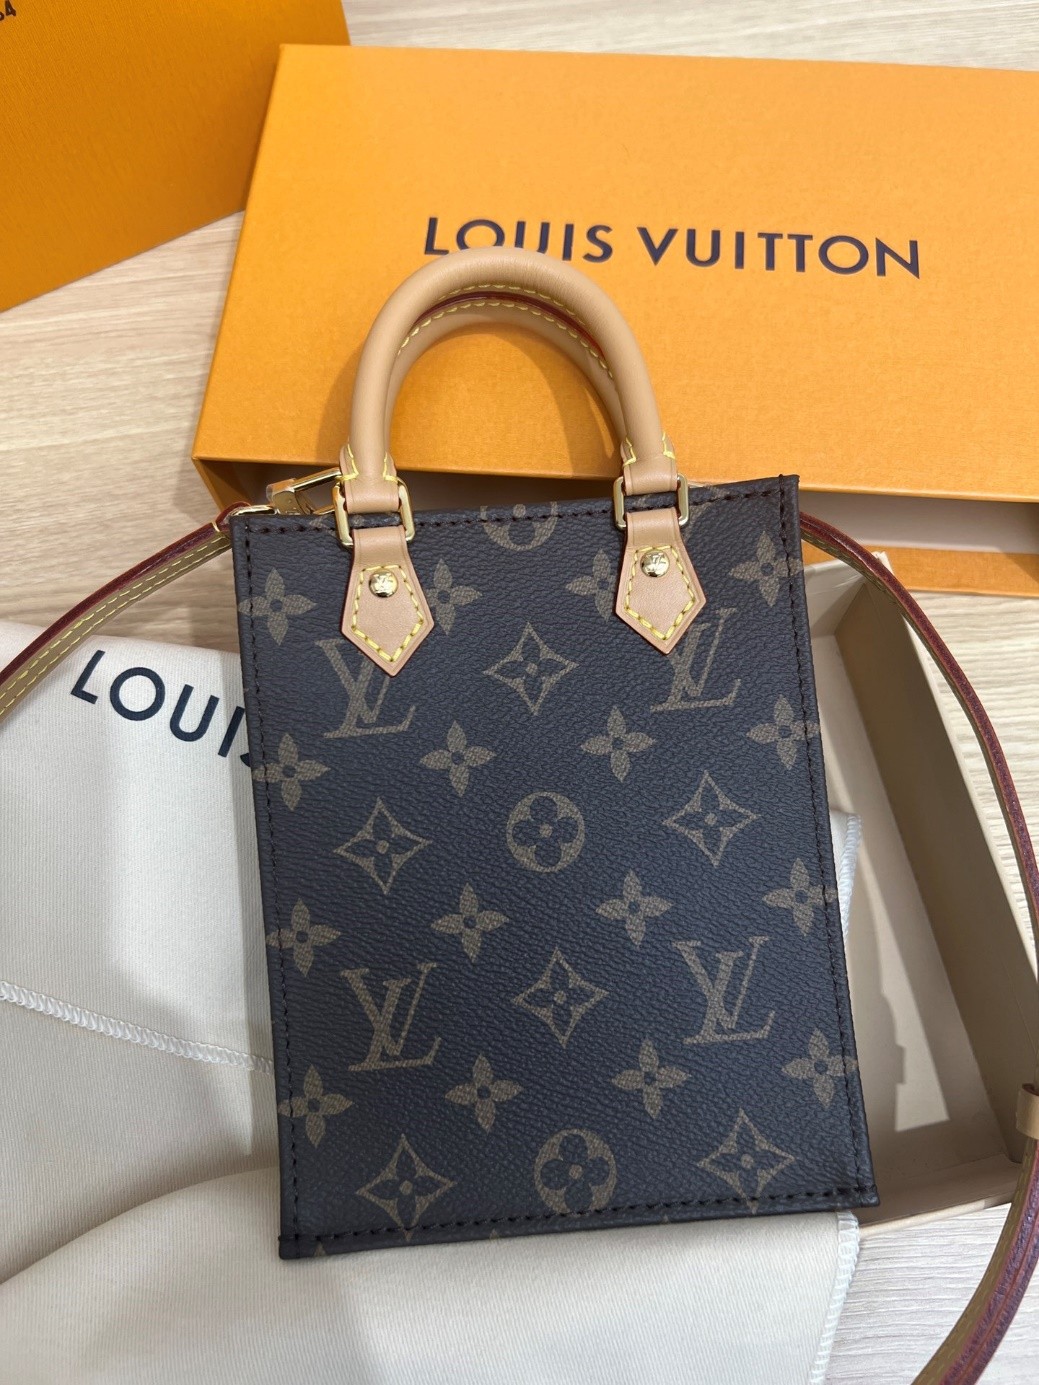 How good quality is a Shebag Louis Vuitton PETIT SAC PLAT bag（2023 udpated）-Beste Qualität gefälschte Louis Vuitton-Taschen Online-Shop, Replik-Designer-Tasche ru